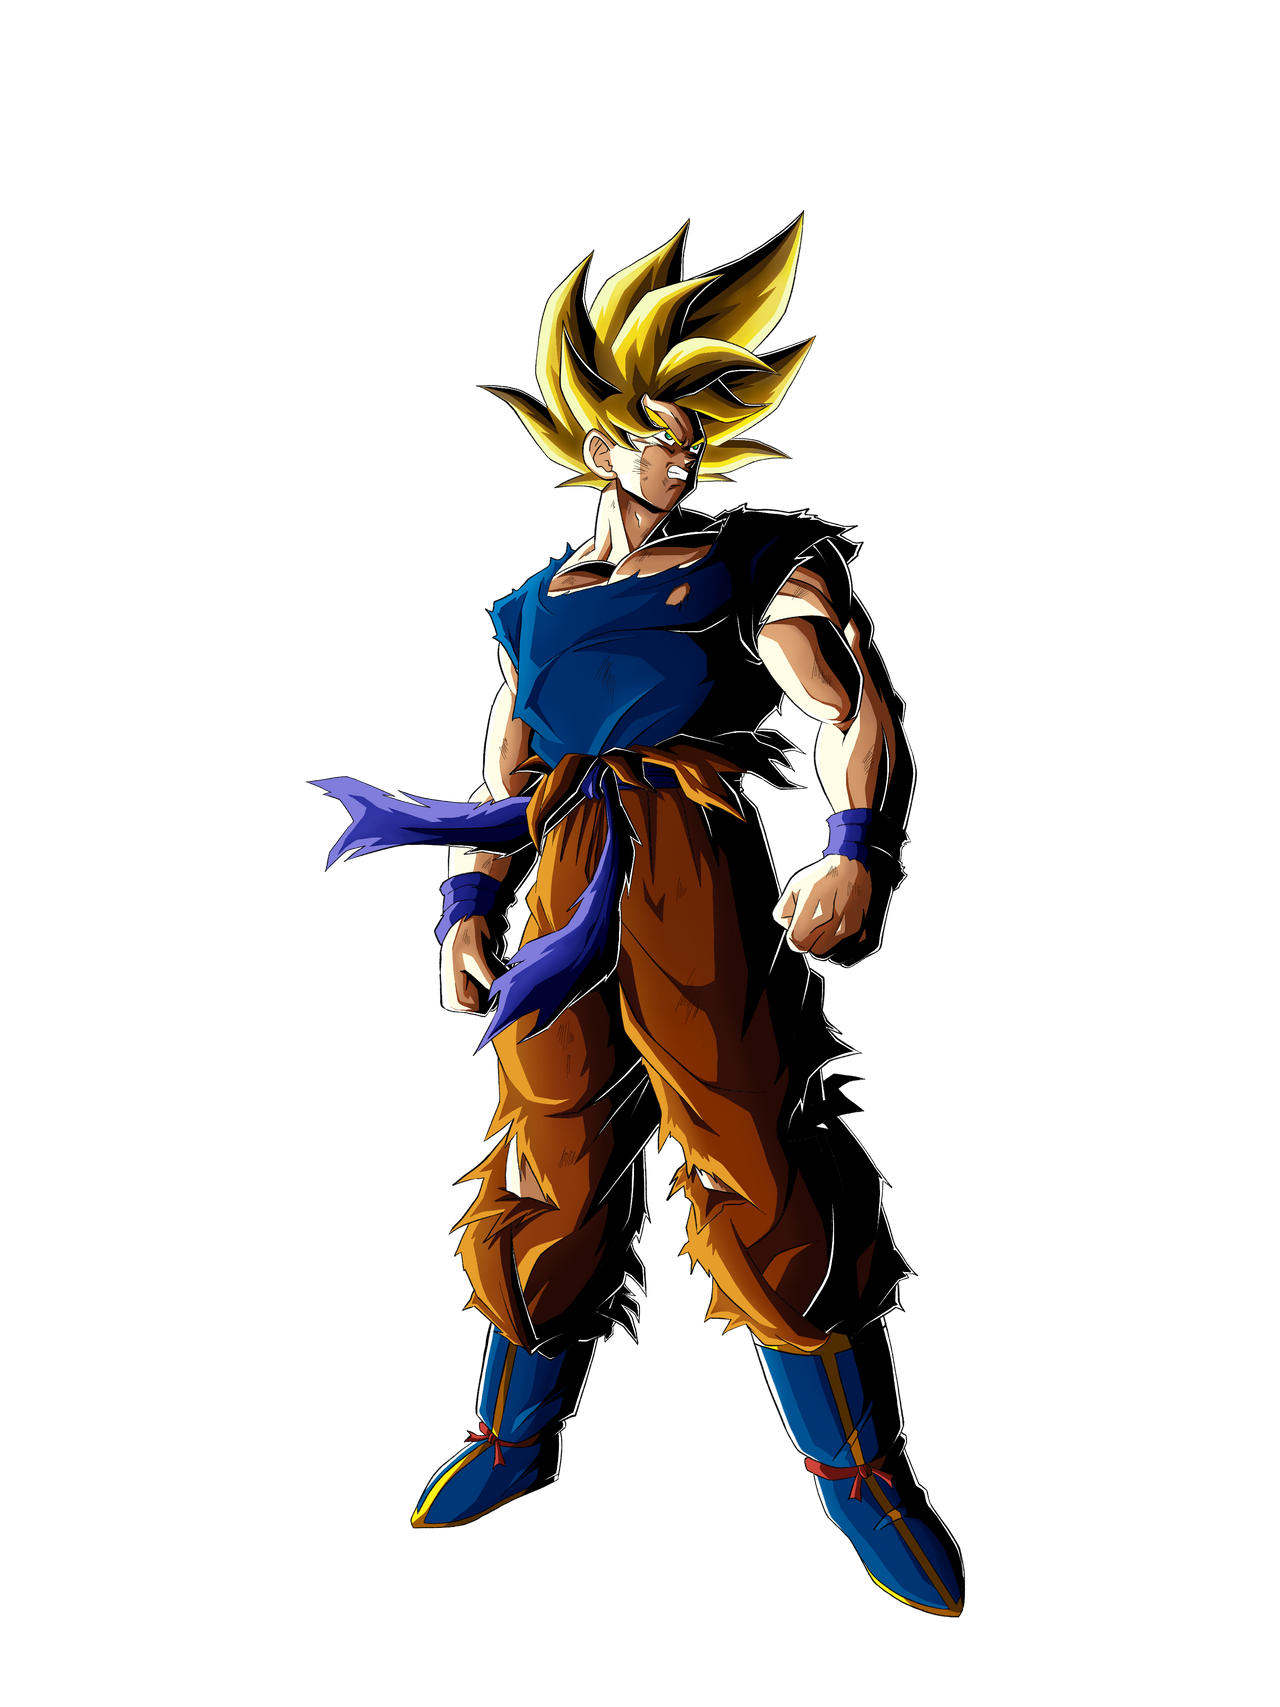 What is the highest Super Saiyan Goku reaches? - Quora